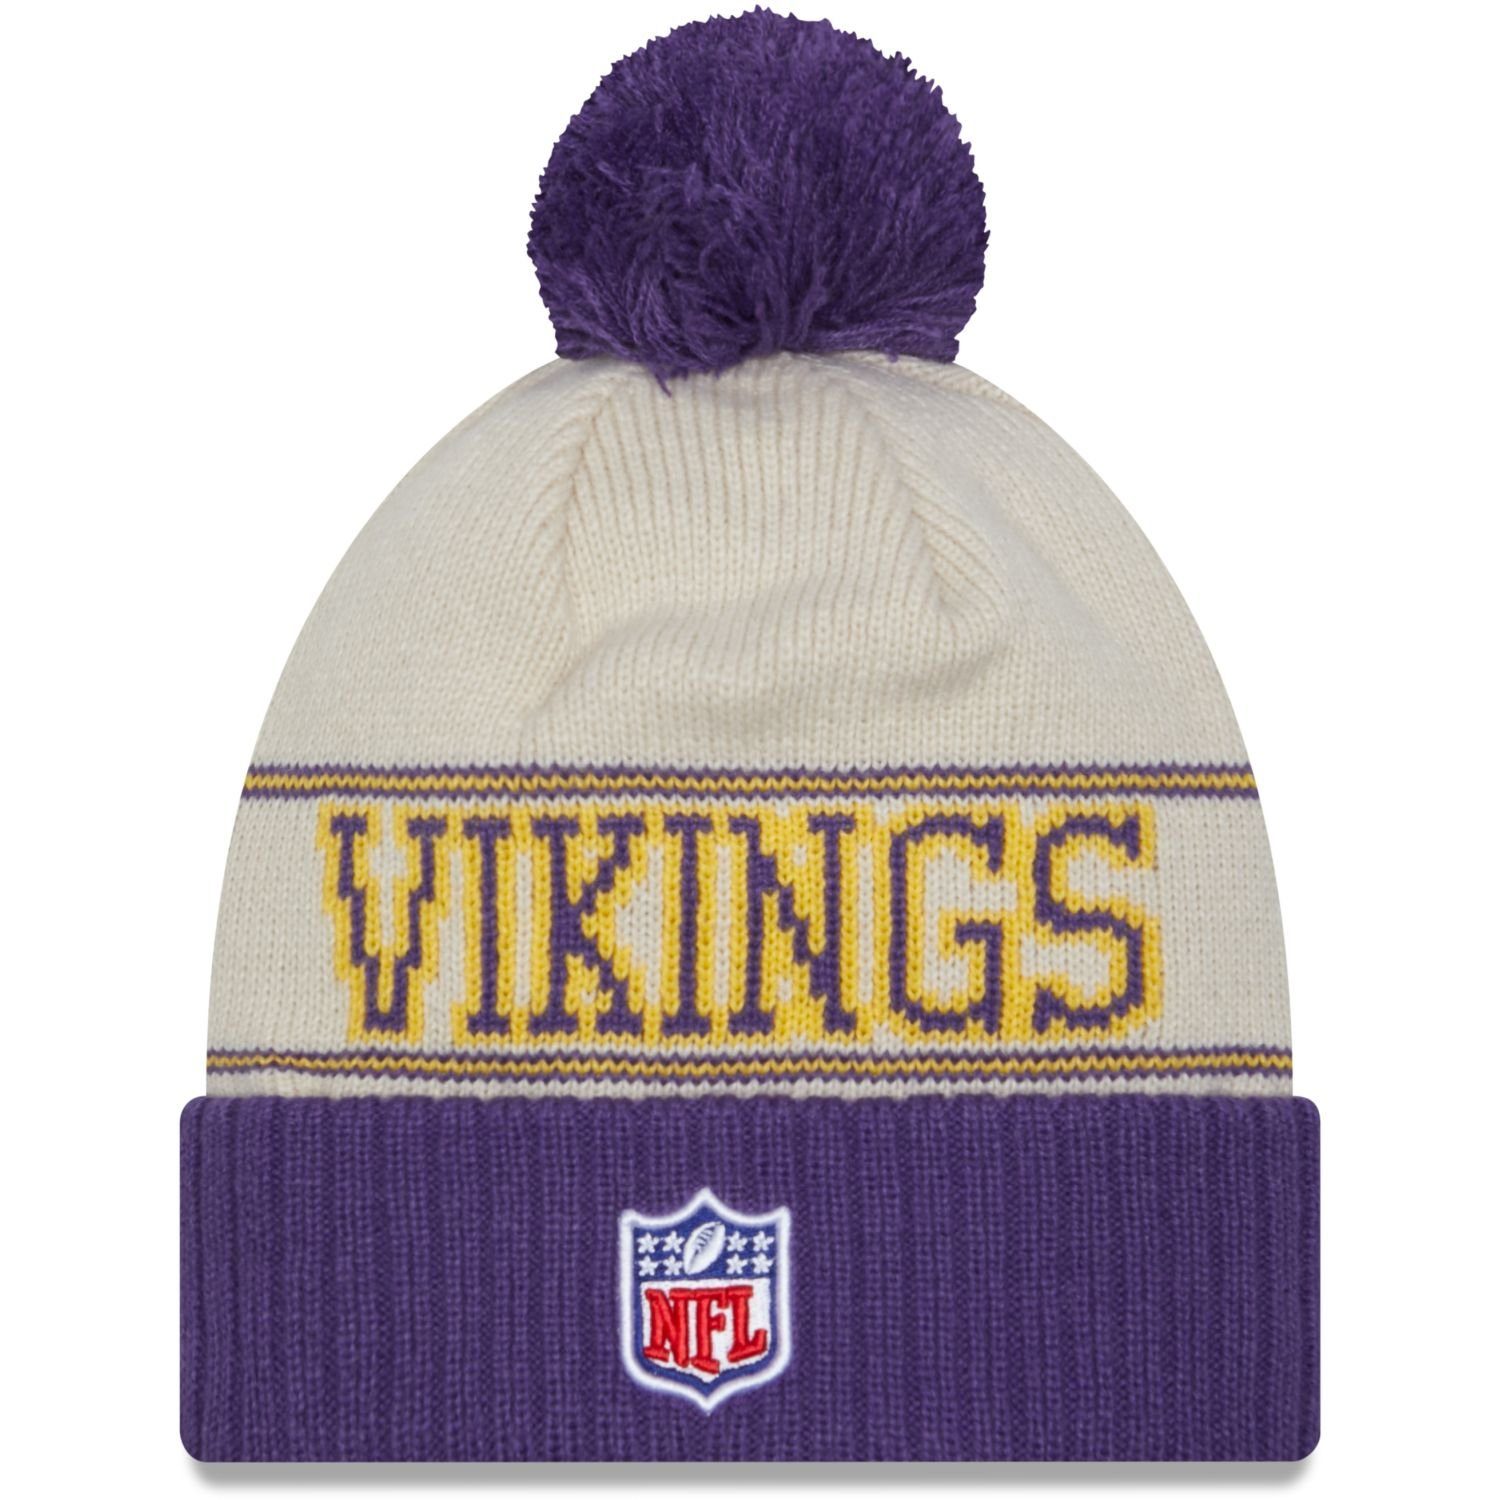 New Era Fleecemütze NFL HISTORIC SIDELINE Minnesota Vikings